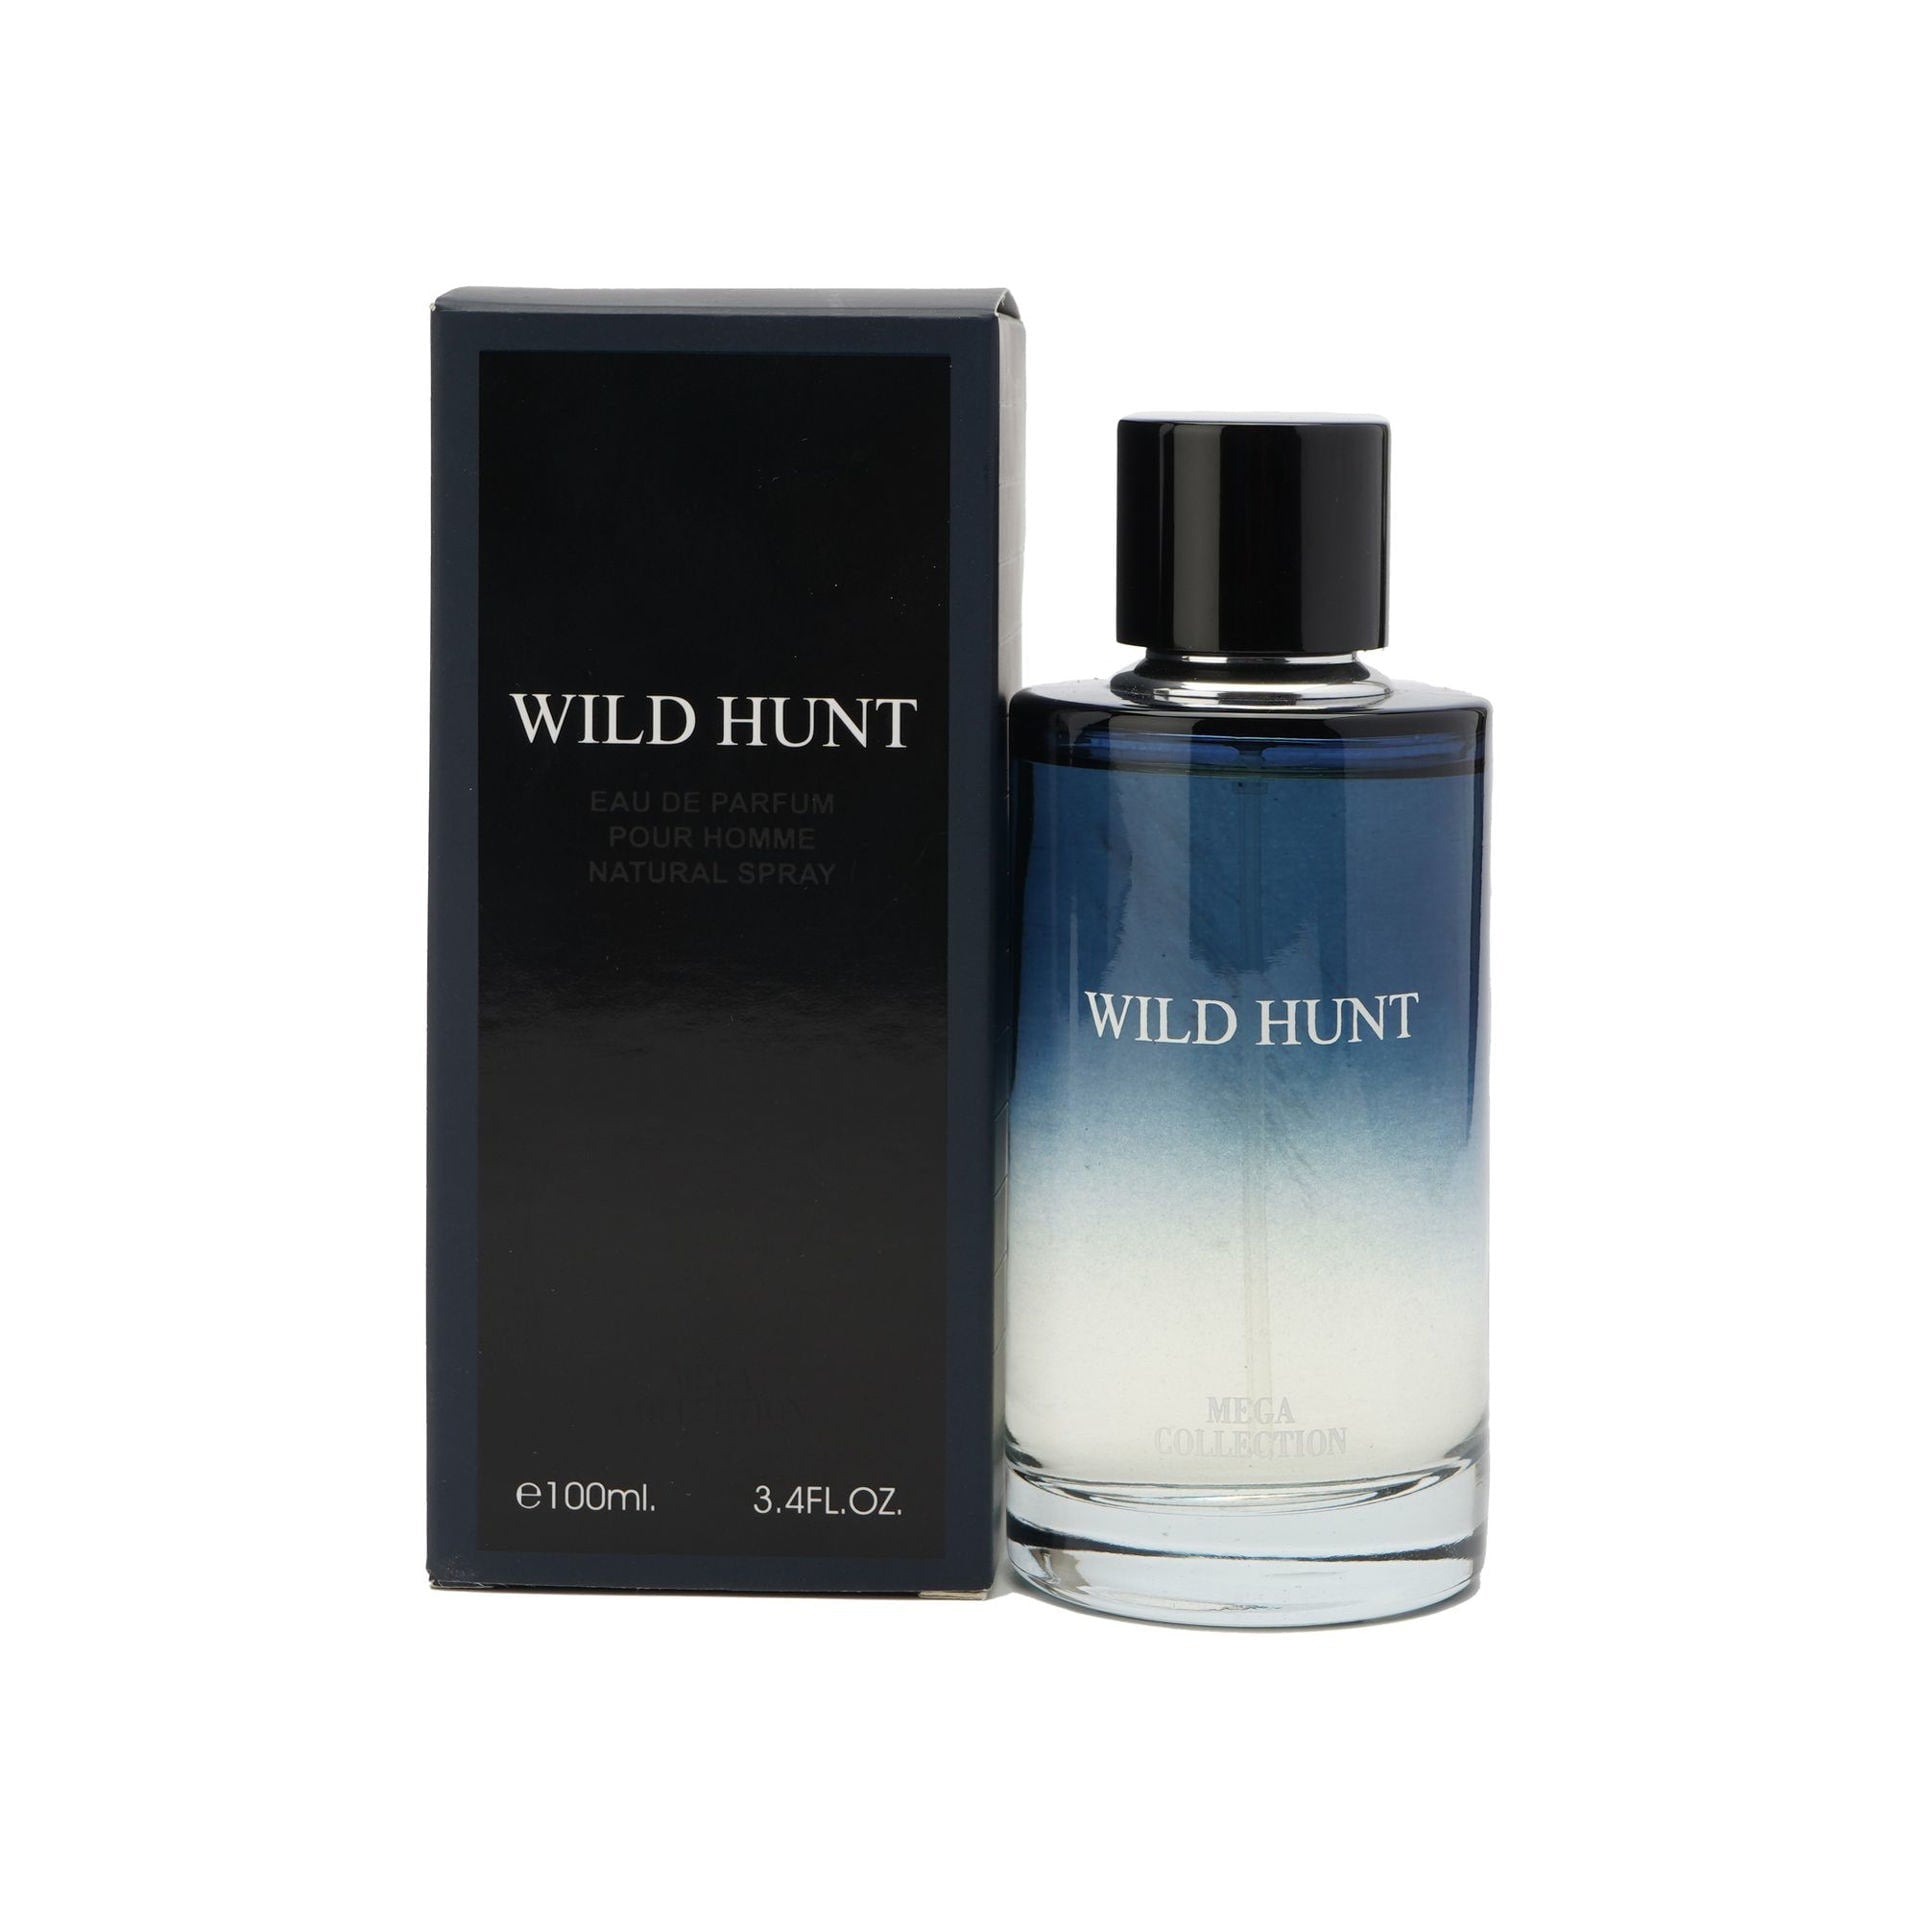 Wild Hunt Perfum EDP by Ard Al Zaafarn Mega Collection 100ml Intlcosmetic